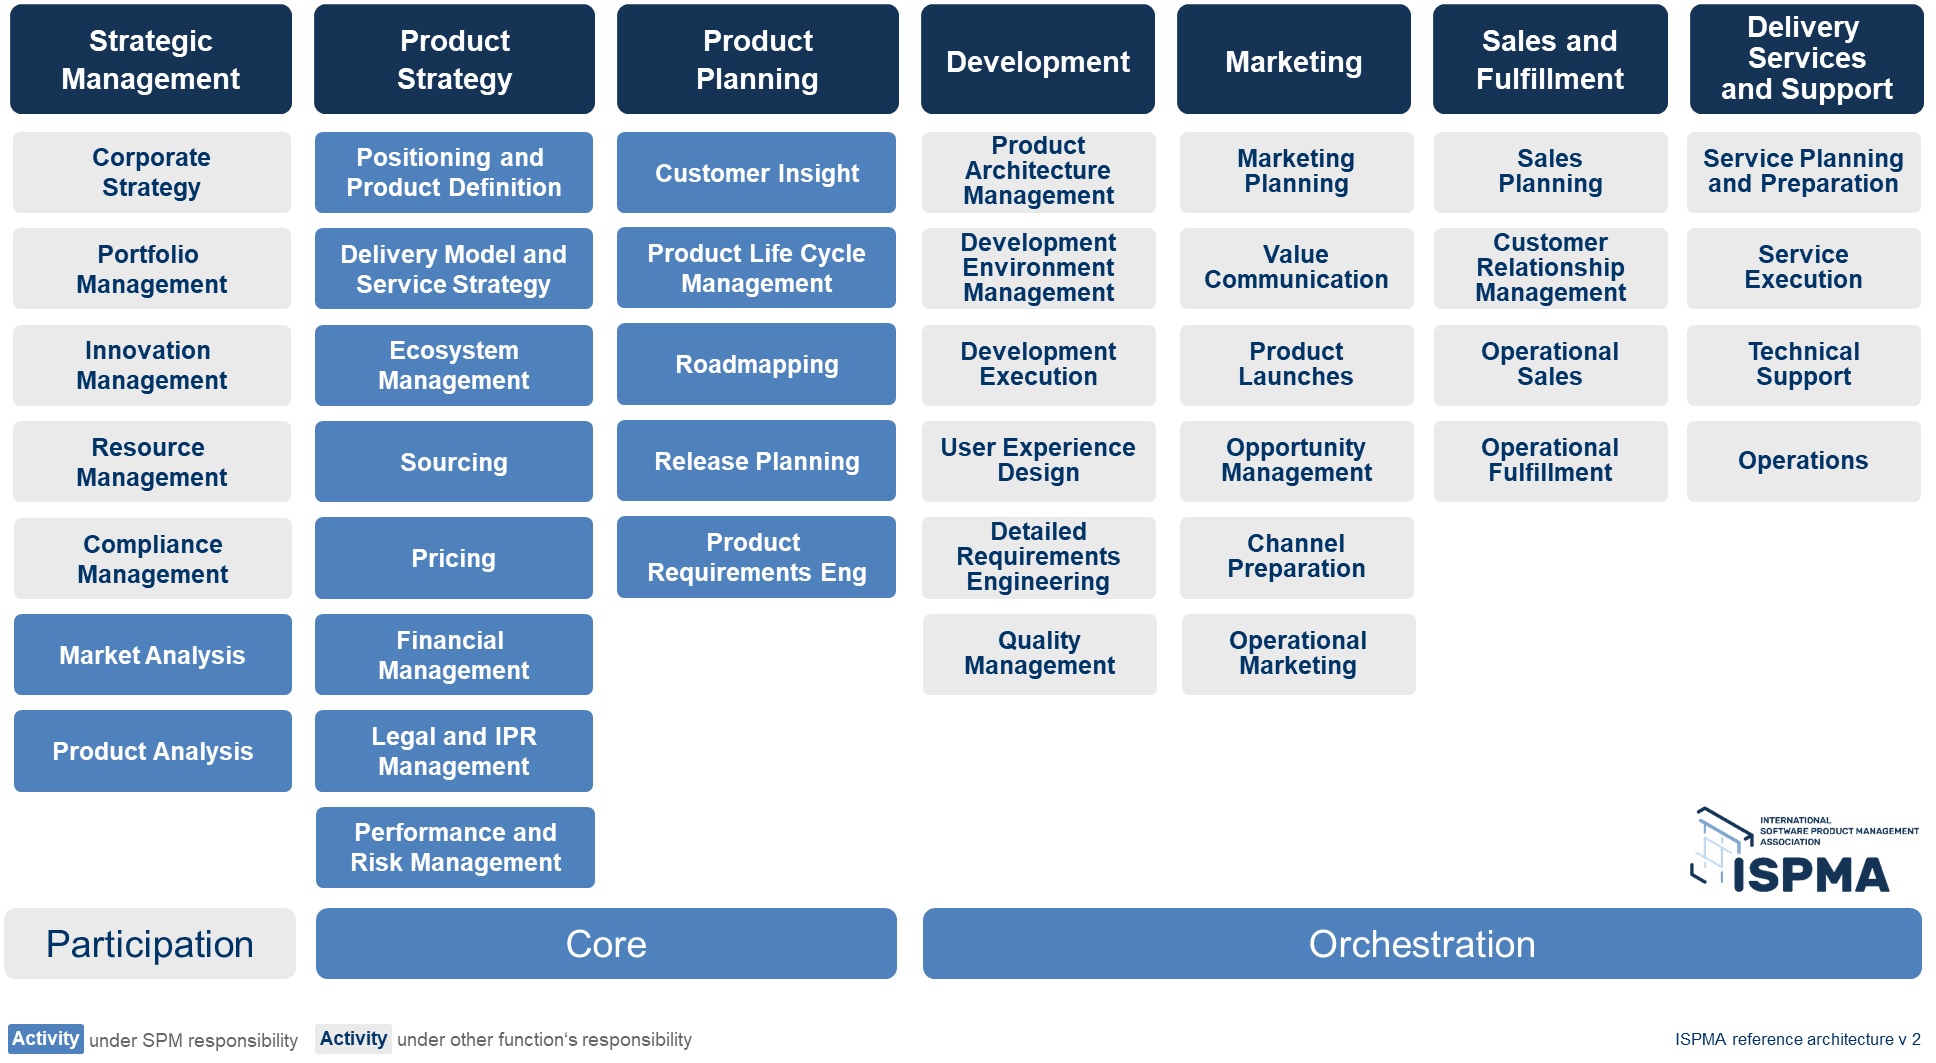 ISPMA's Software Product Management Framework 2.0